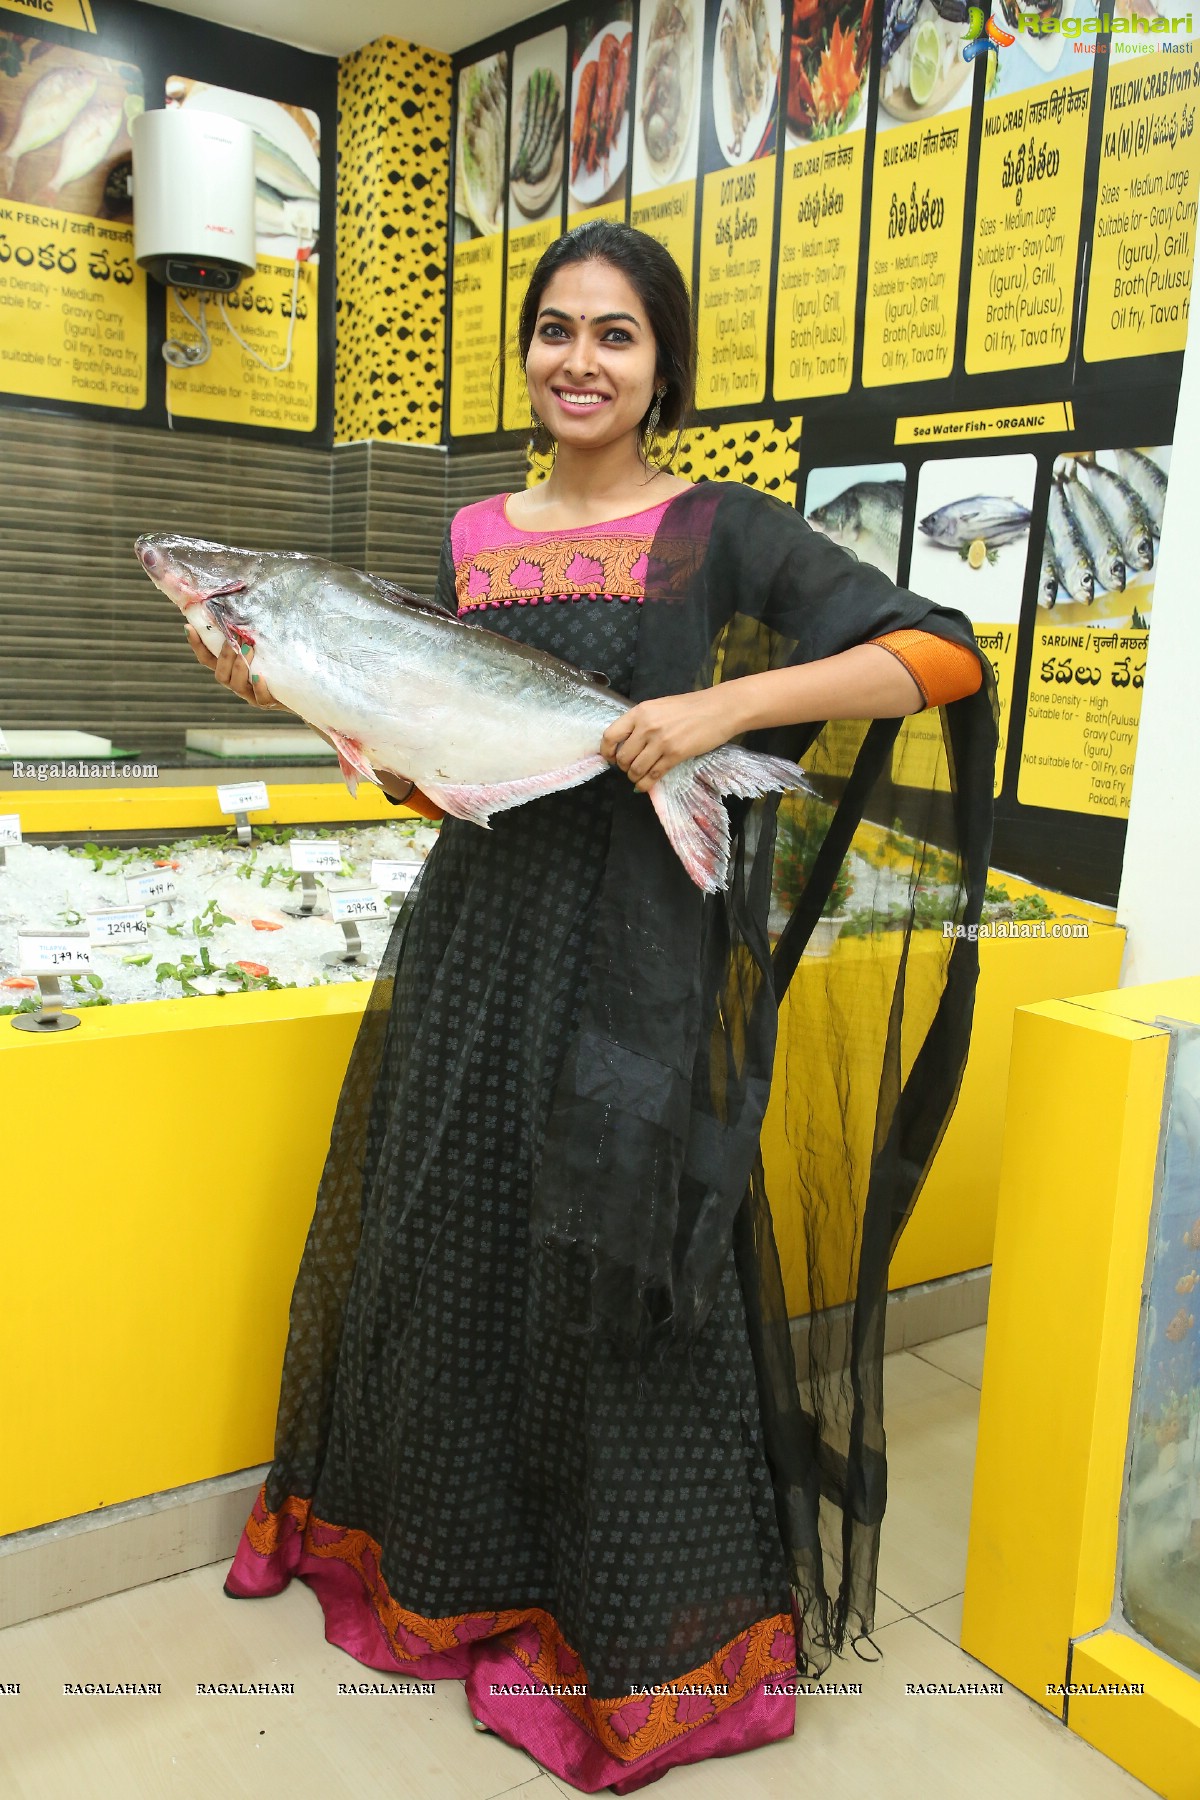 Proteins Hygiene NonVeg Mart Announces Bigg Boss fame Divi Vadthya as Their Brand Ambassador 